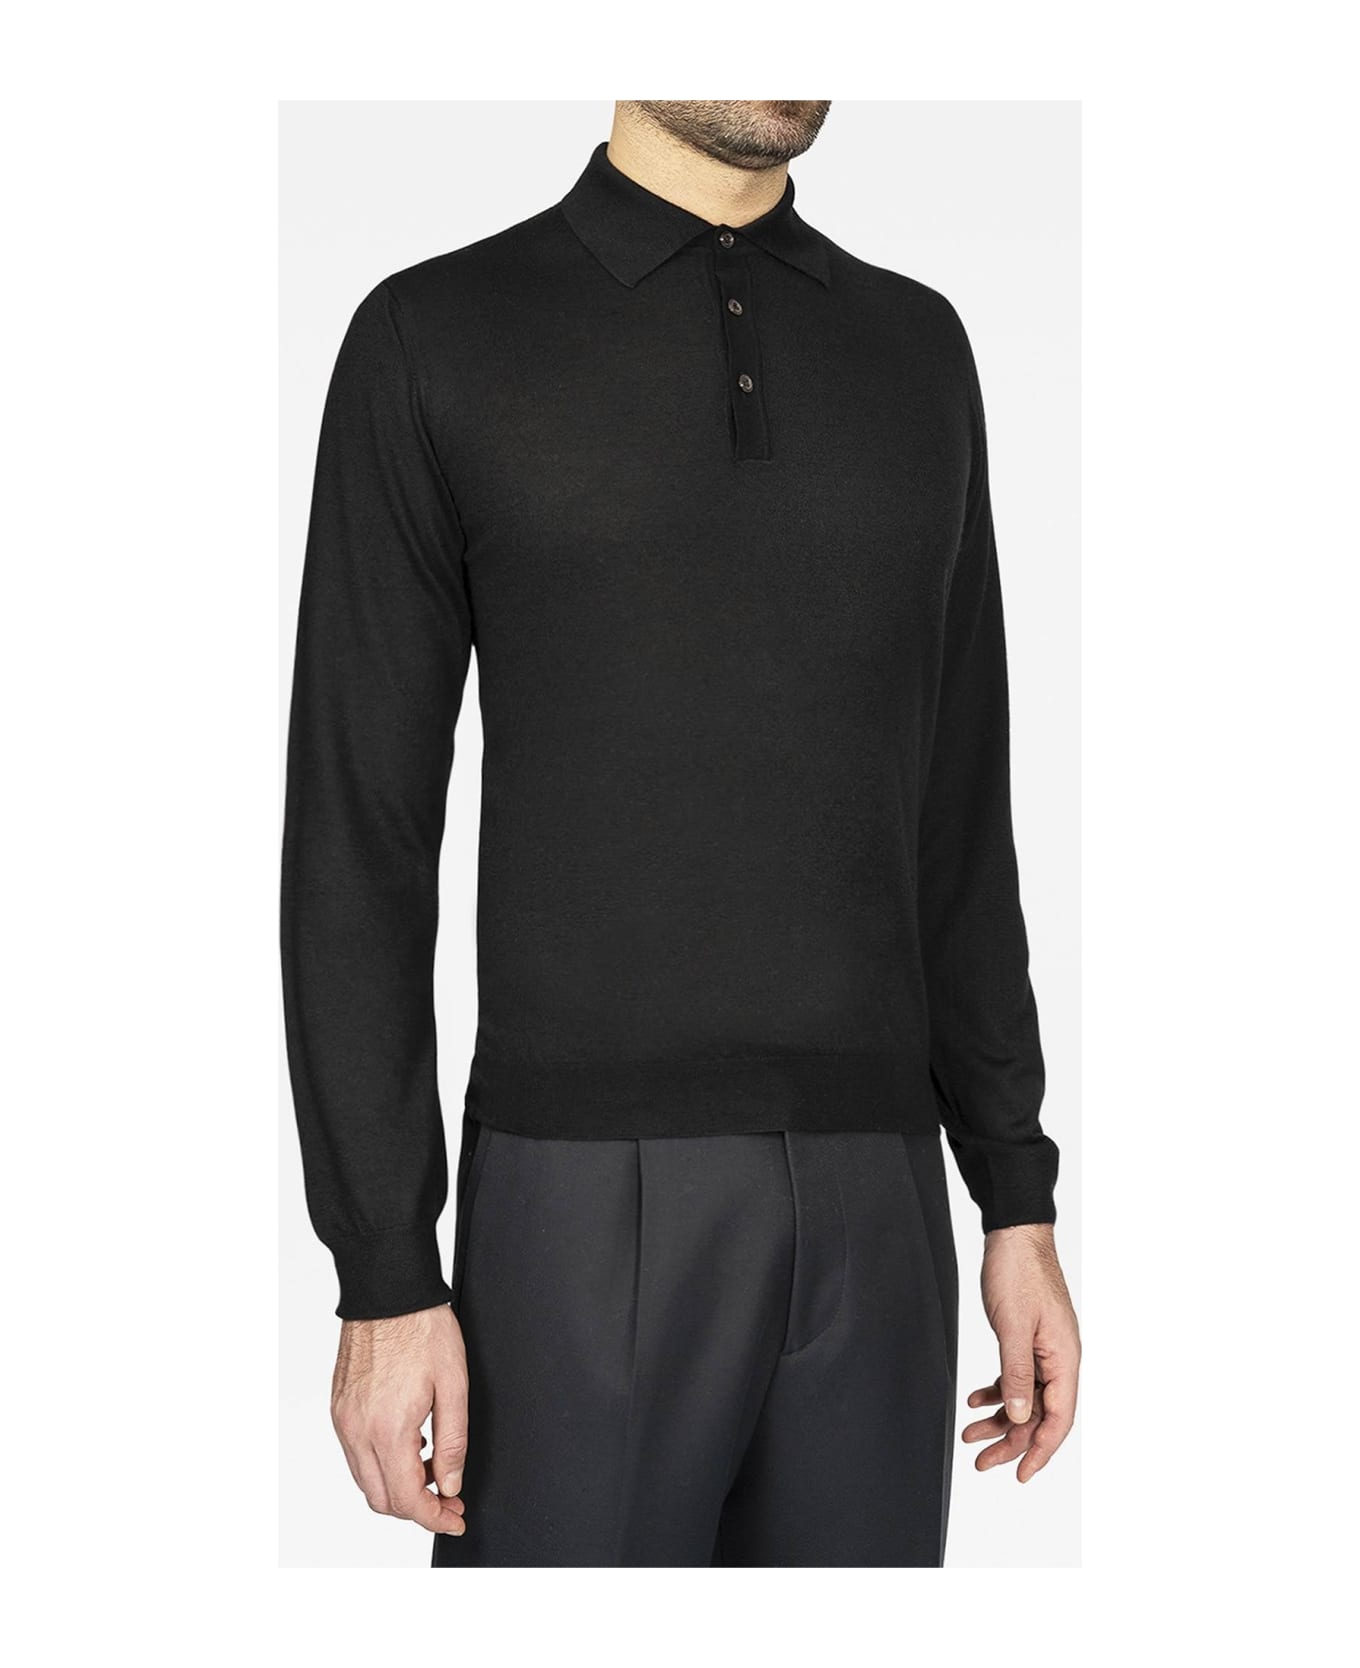 Larusmiani Long Sleeve Polo 'coppa Europa' Sweater - Black